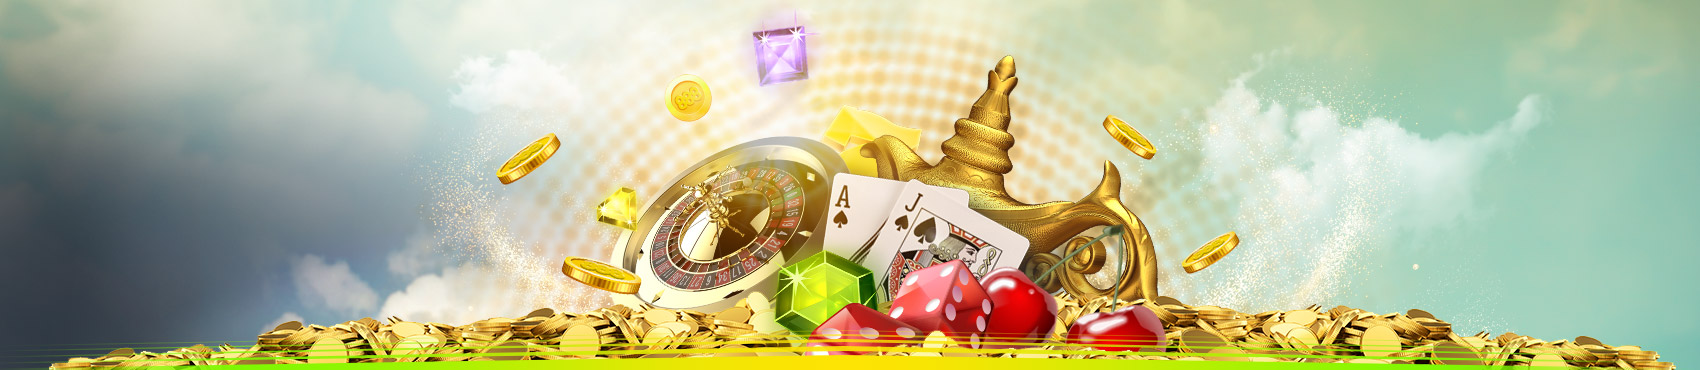 bookmaker 888sport online casino welcome bonus offer